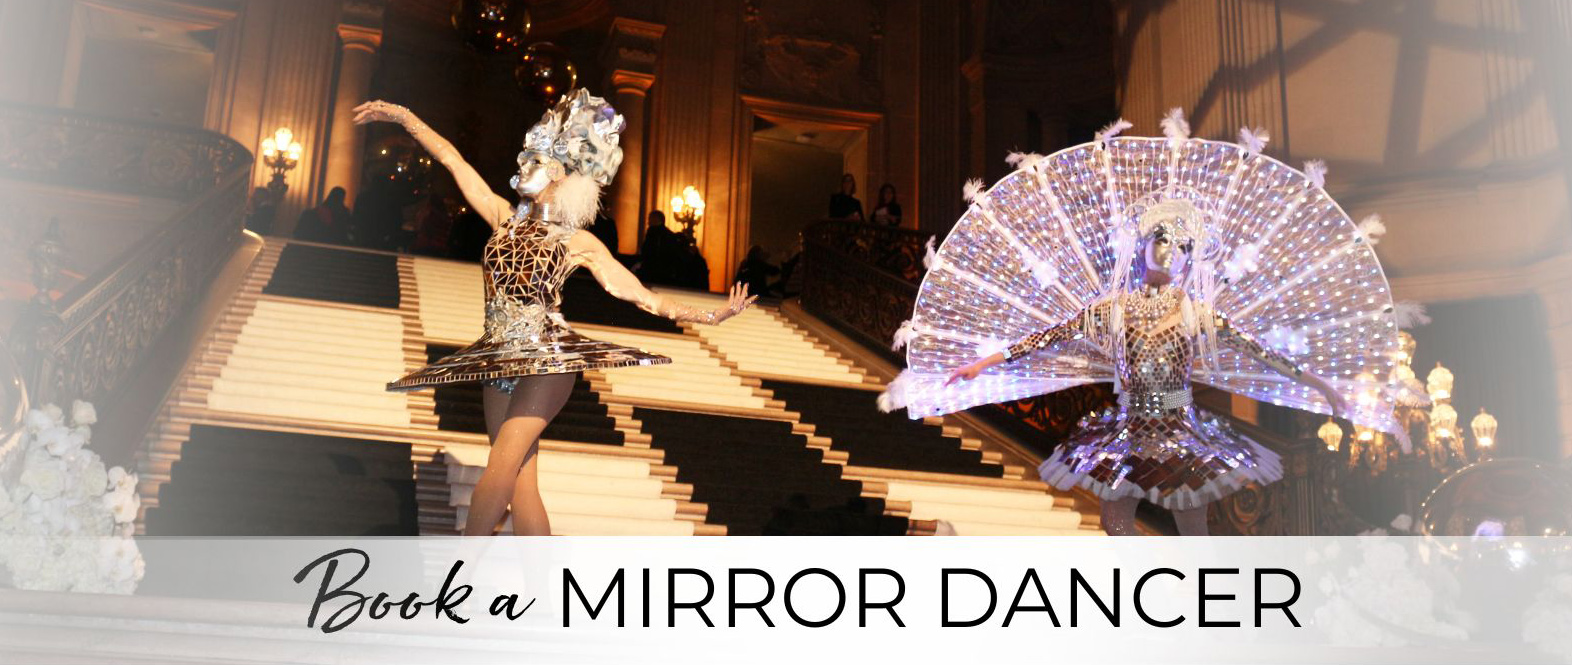 Book a mirror dancer 